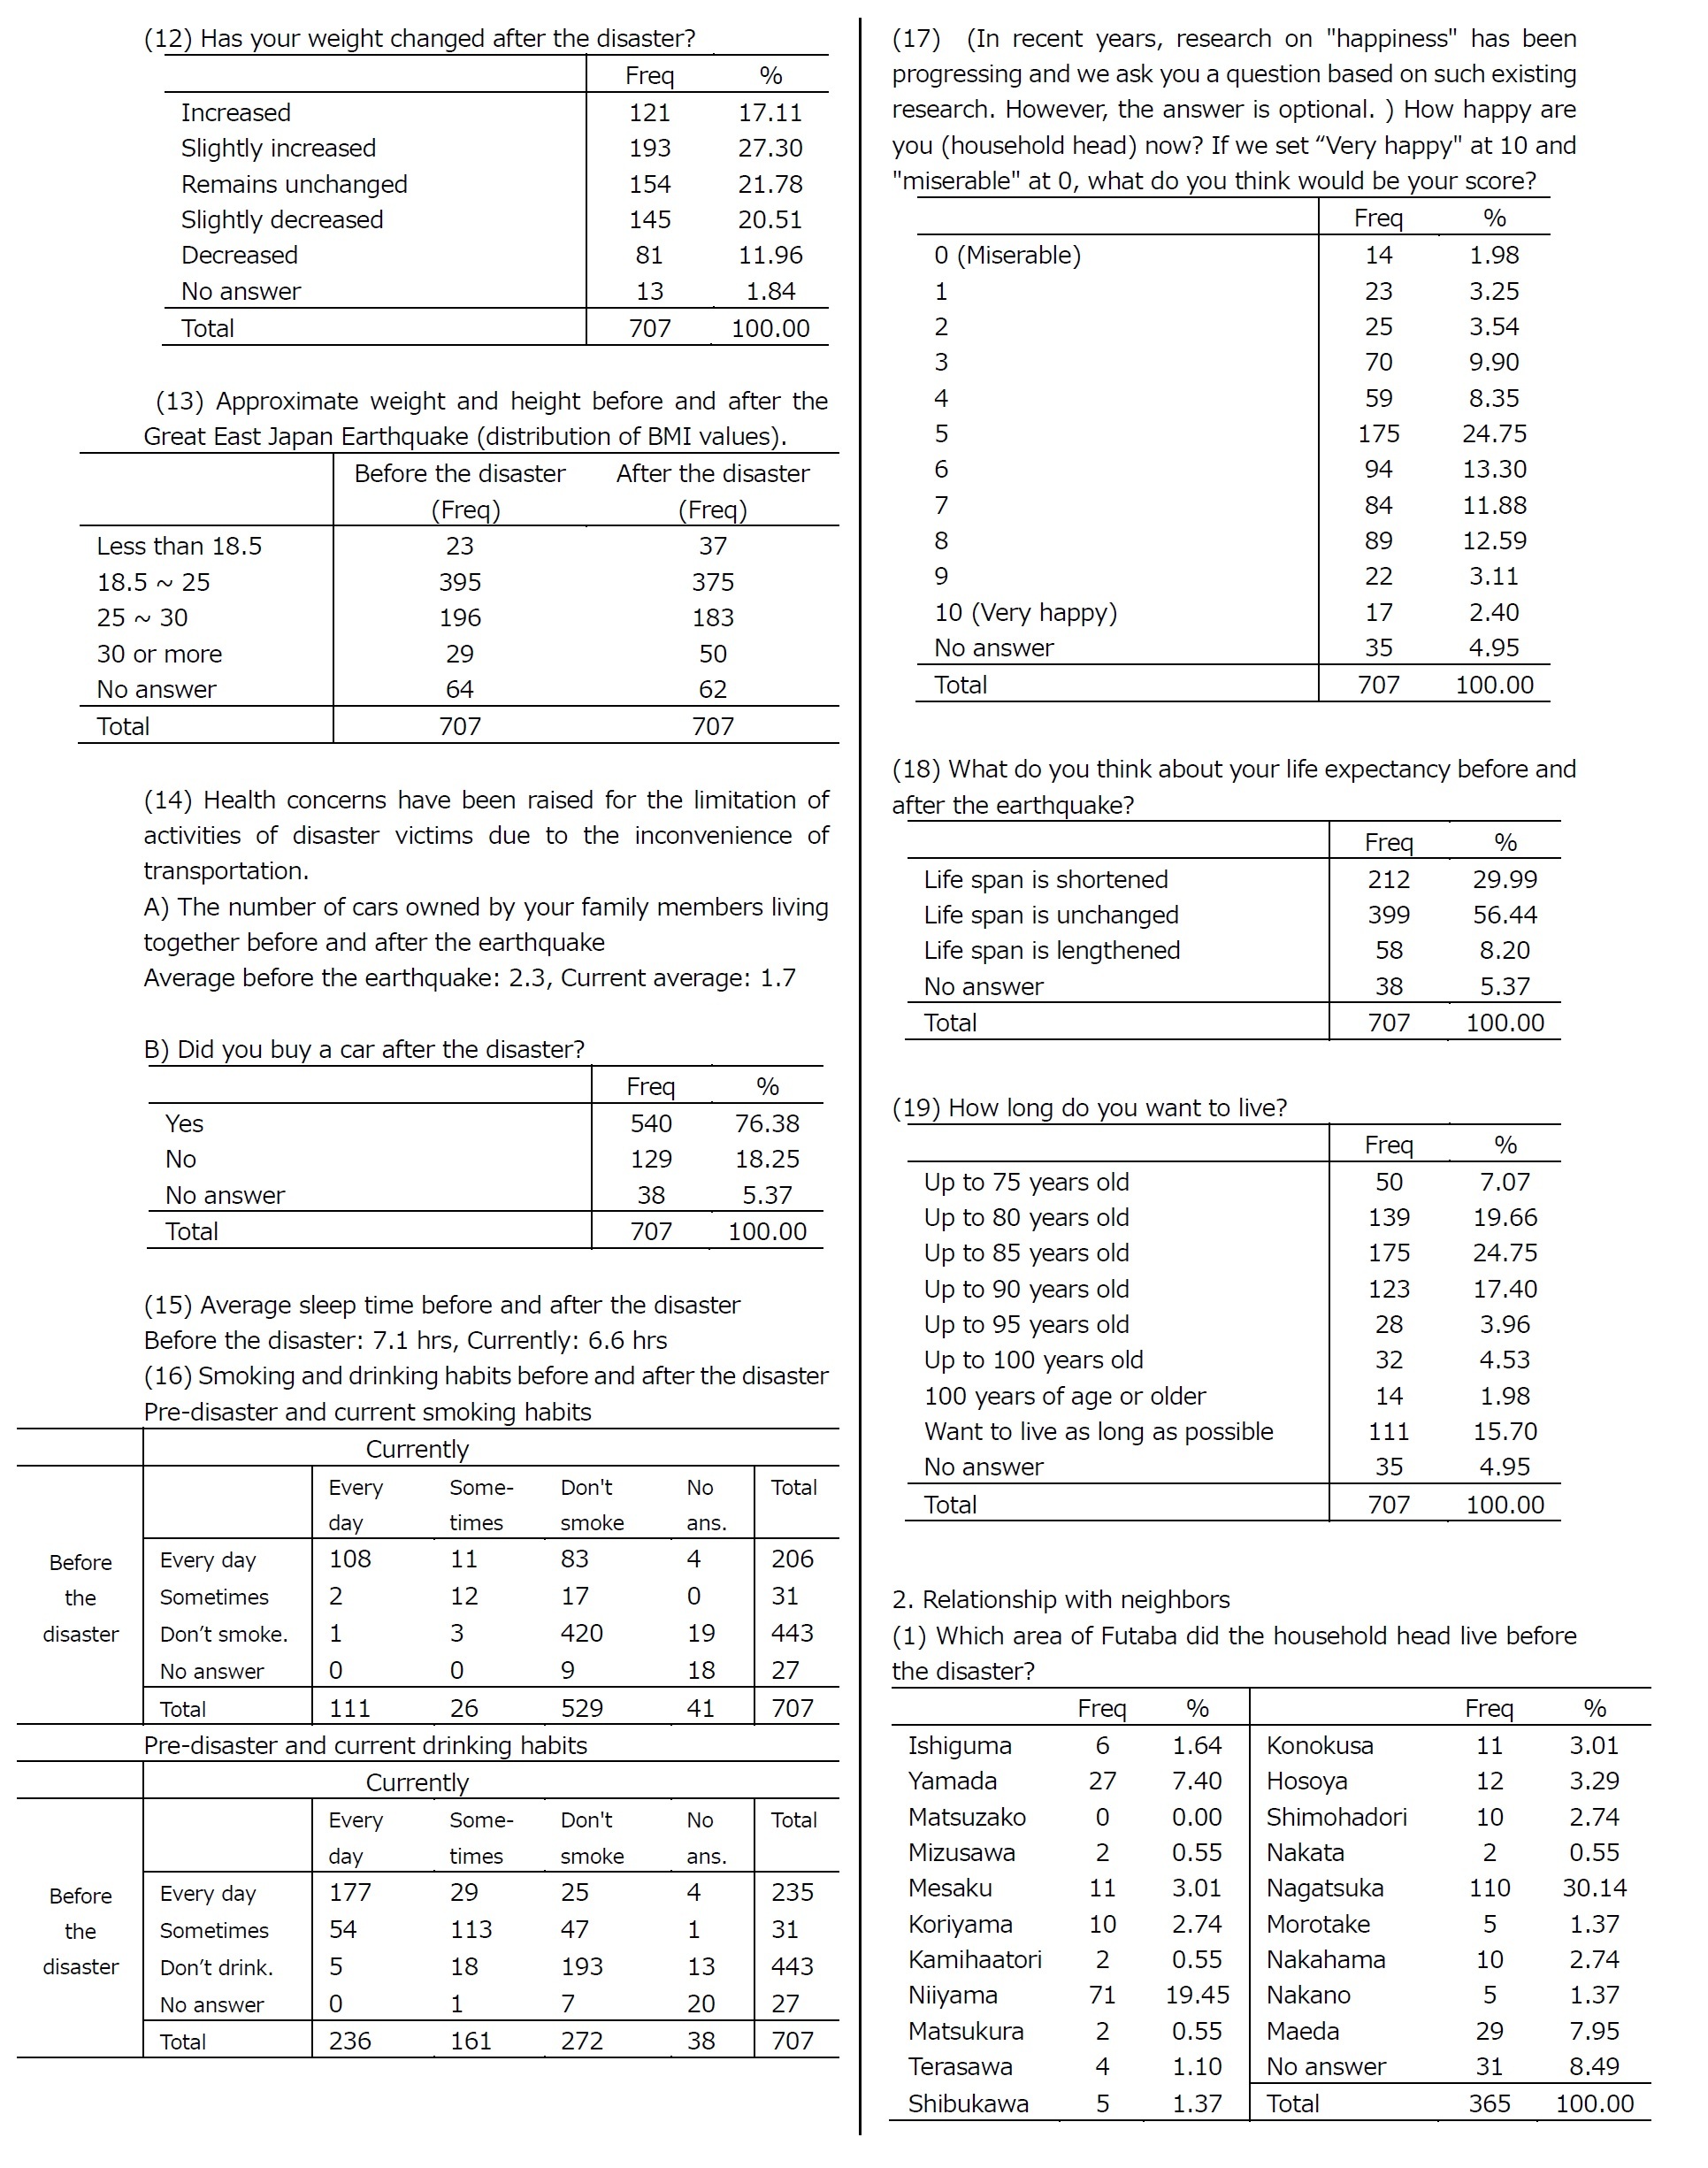 Appendix: Summary Tables4